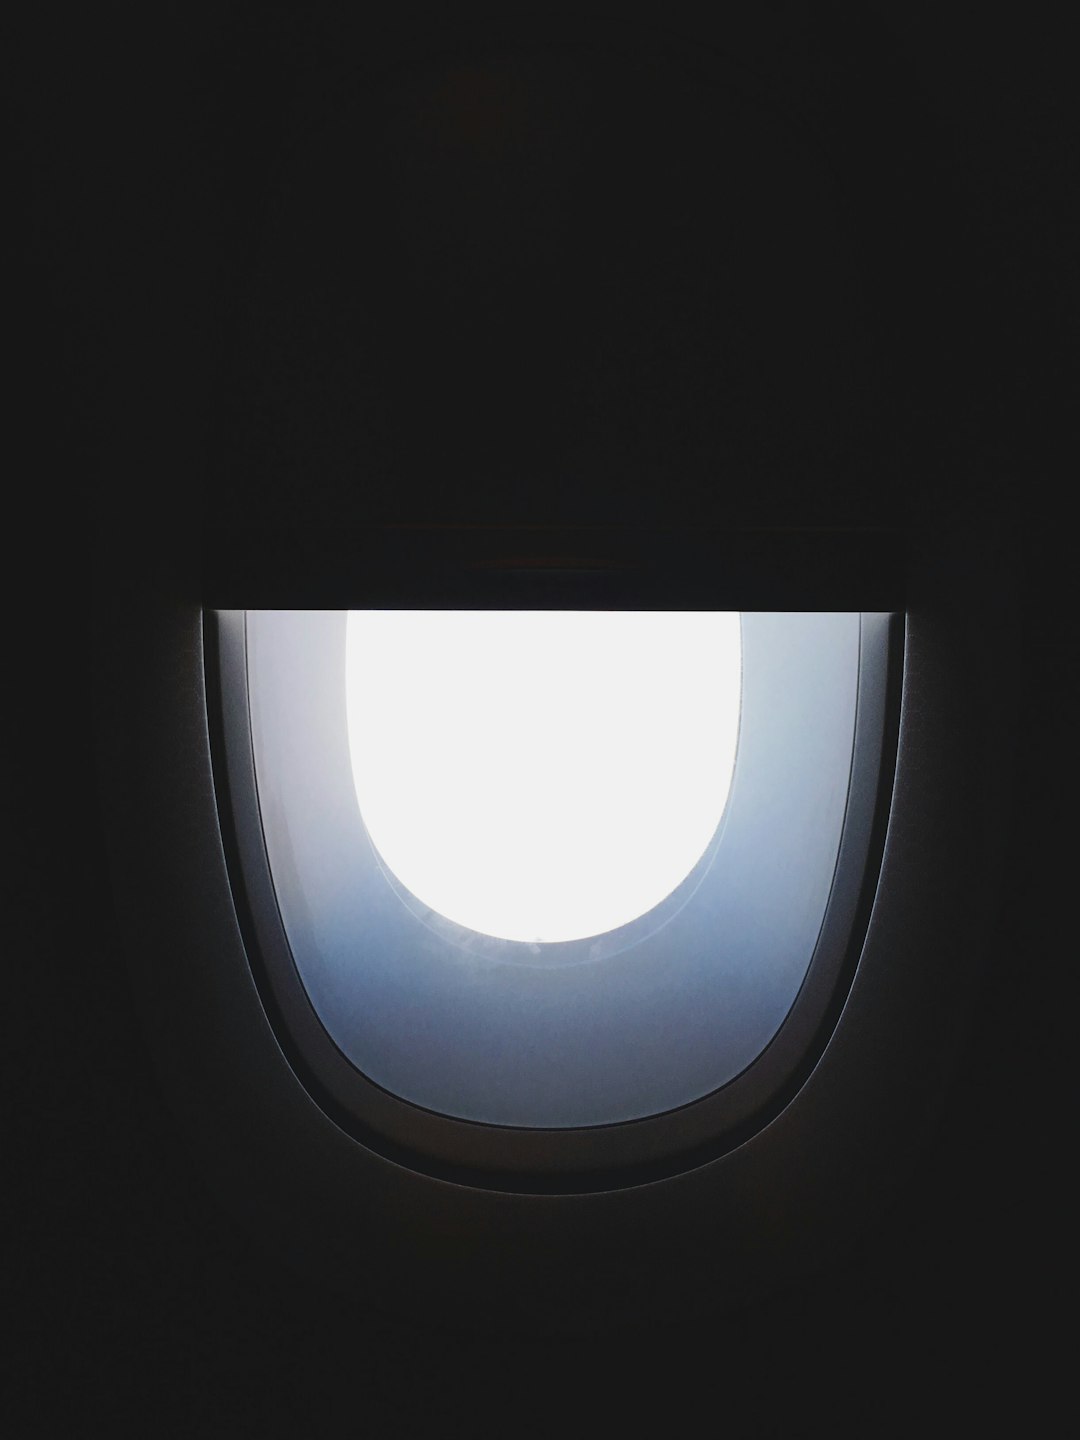 white window plane